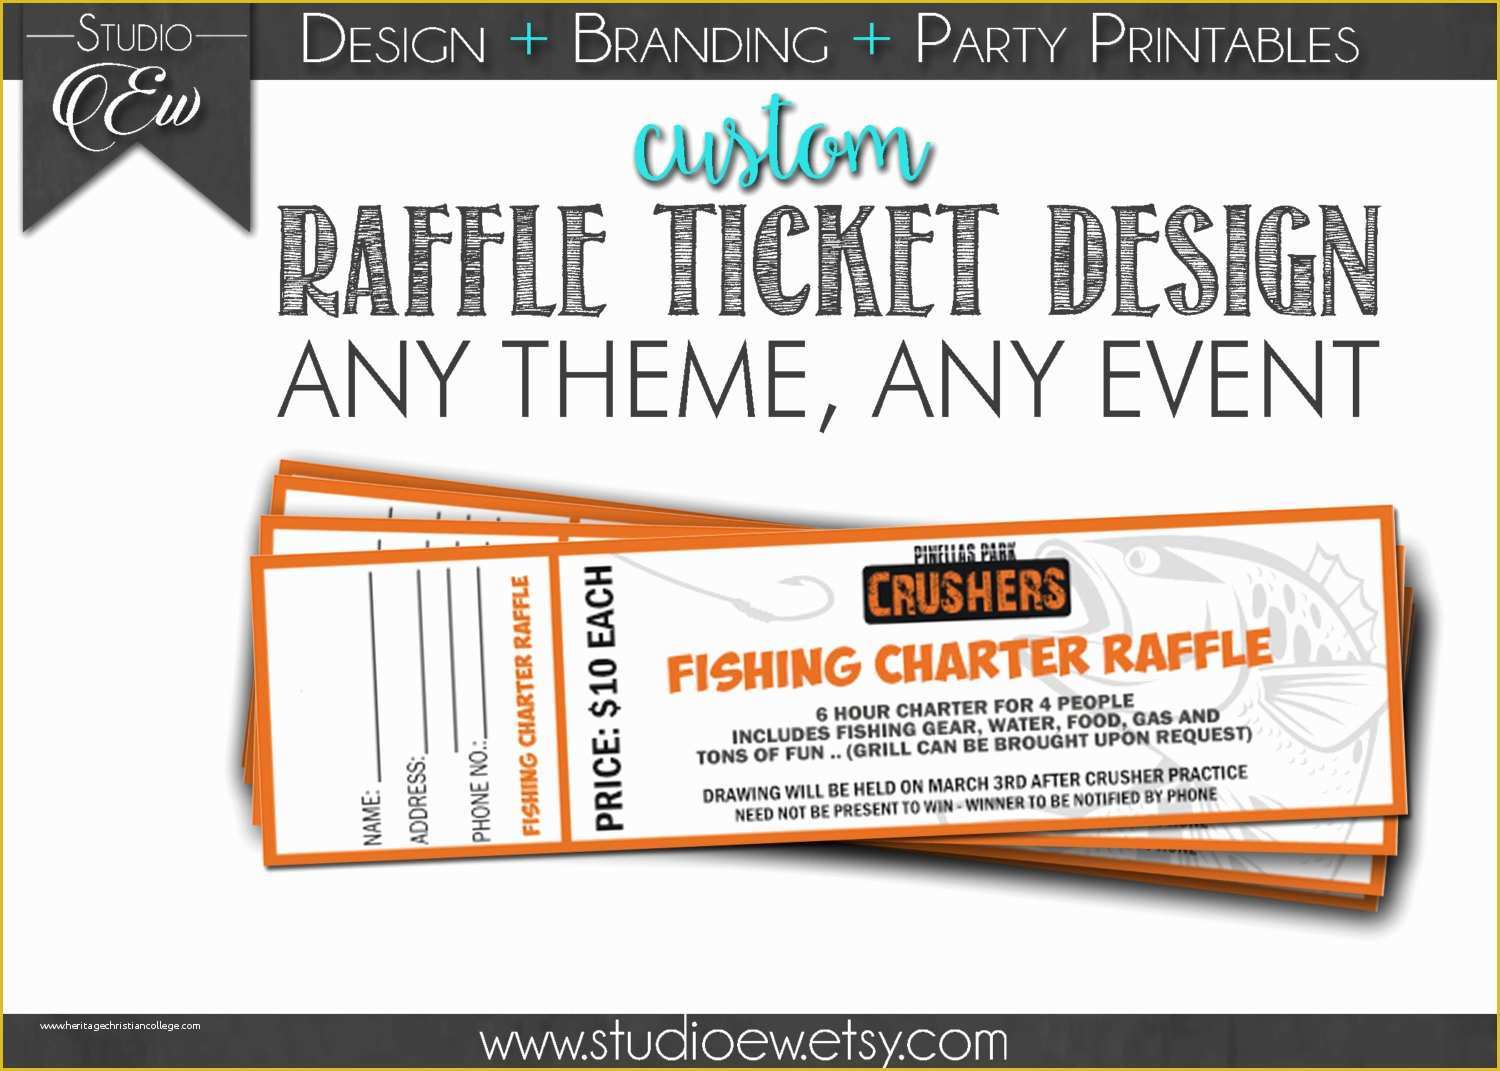 Raffle Flyer Template Free Of Custom Raffle Ticket Design Any event Any theme Fundraiser